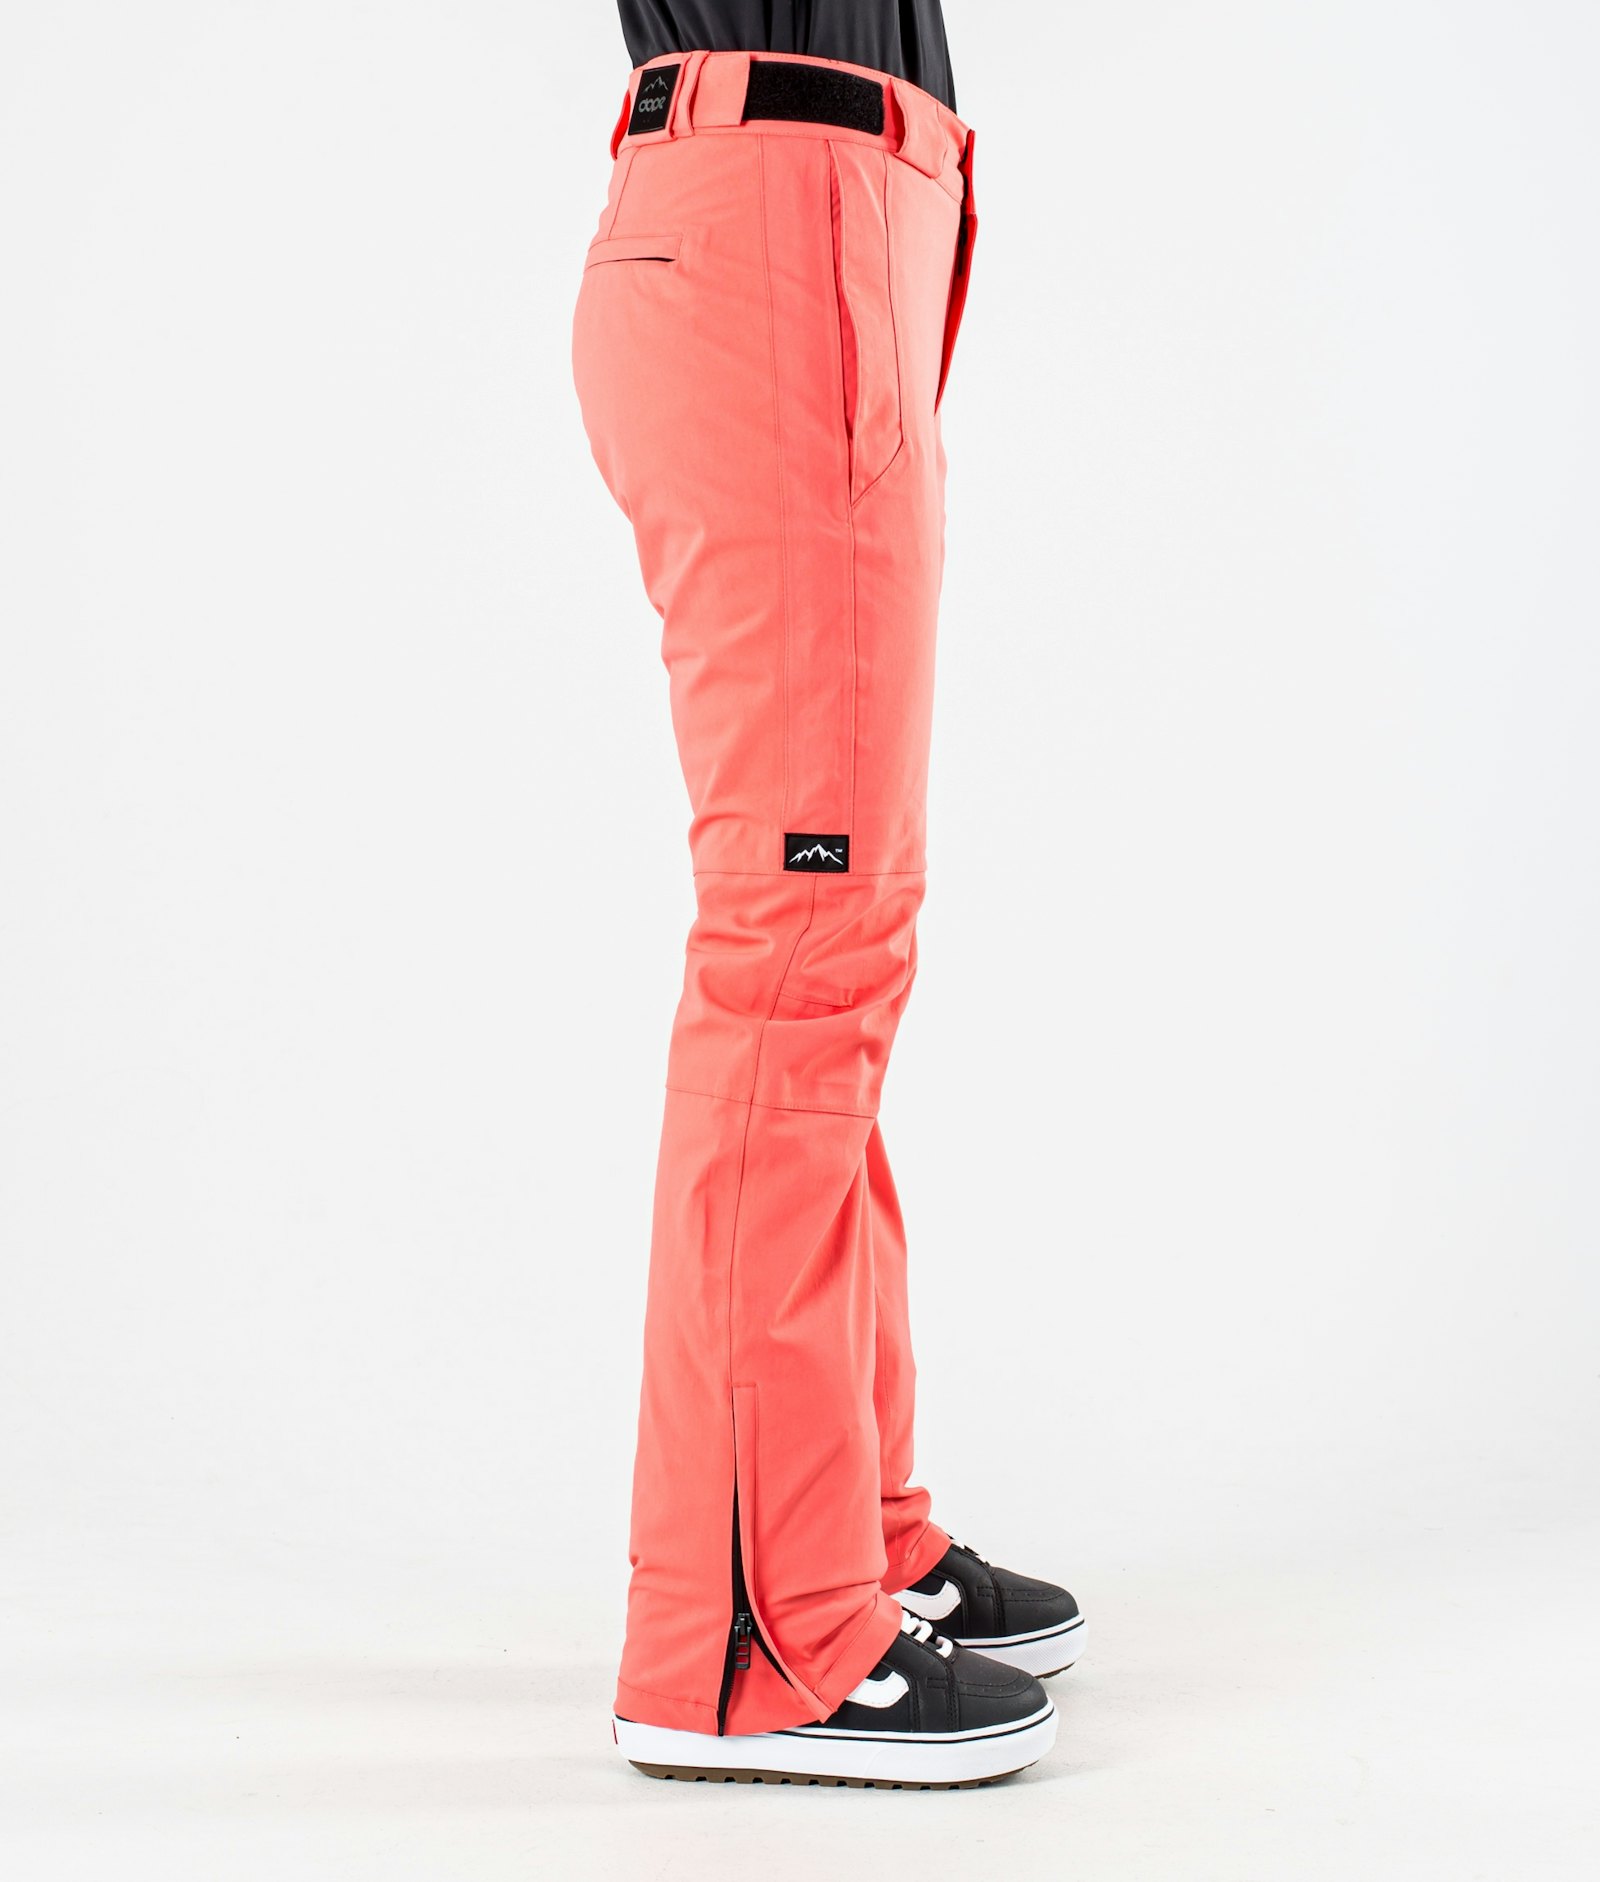 Con W 2020 Pantalon de Snowboard Femme Coral